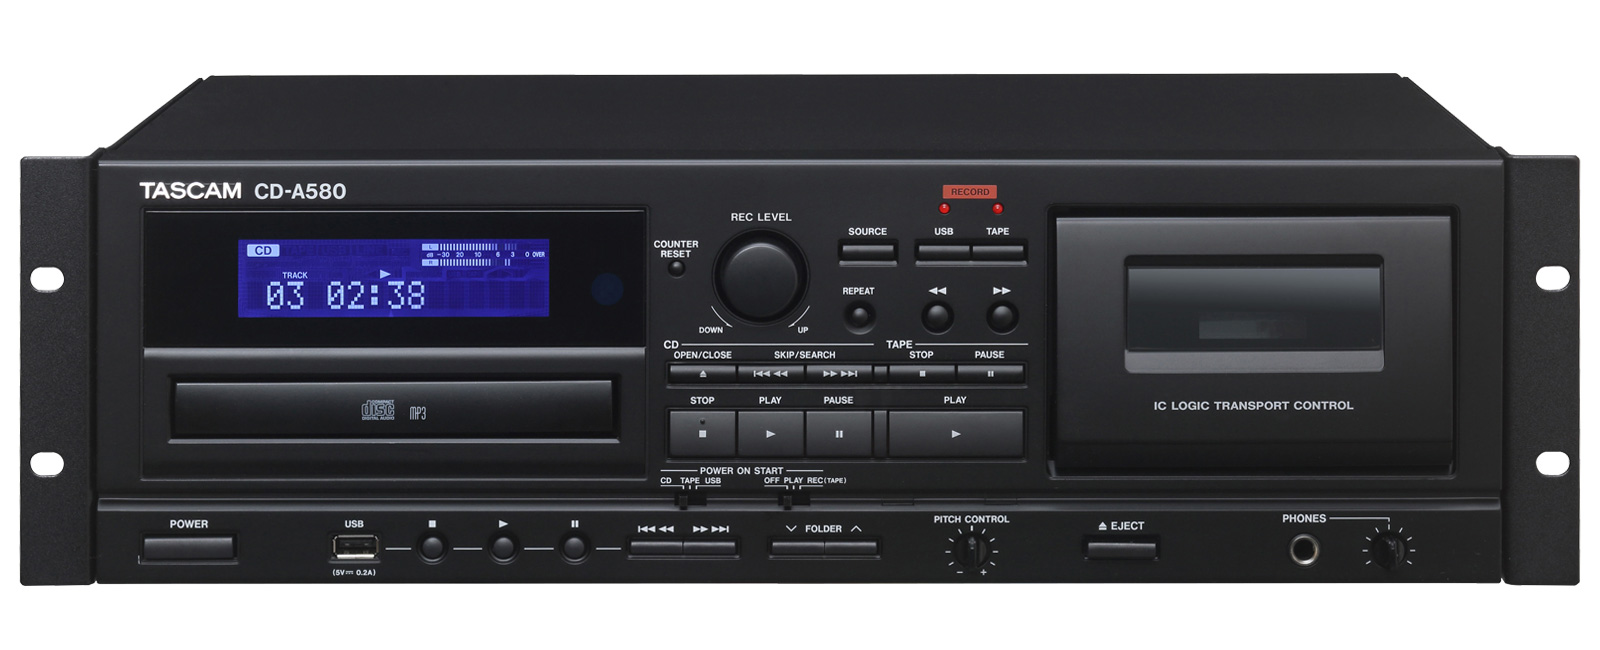 TASCAM anuncia el CD-A580: Grabador de casetes, reproductor de CD y grabador de memoria USB